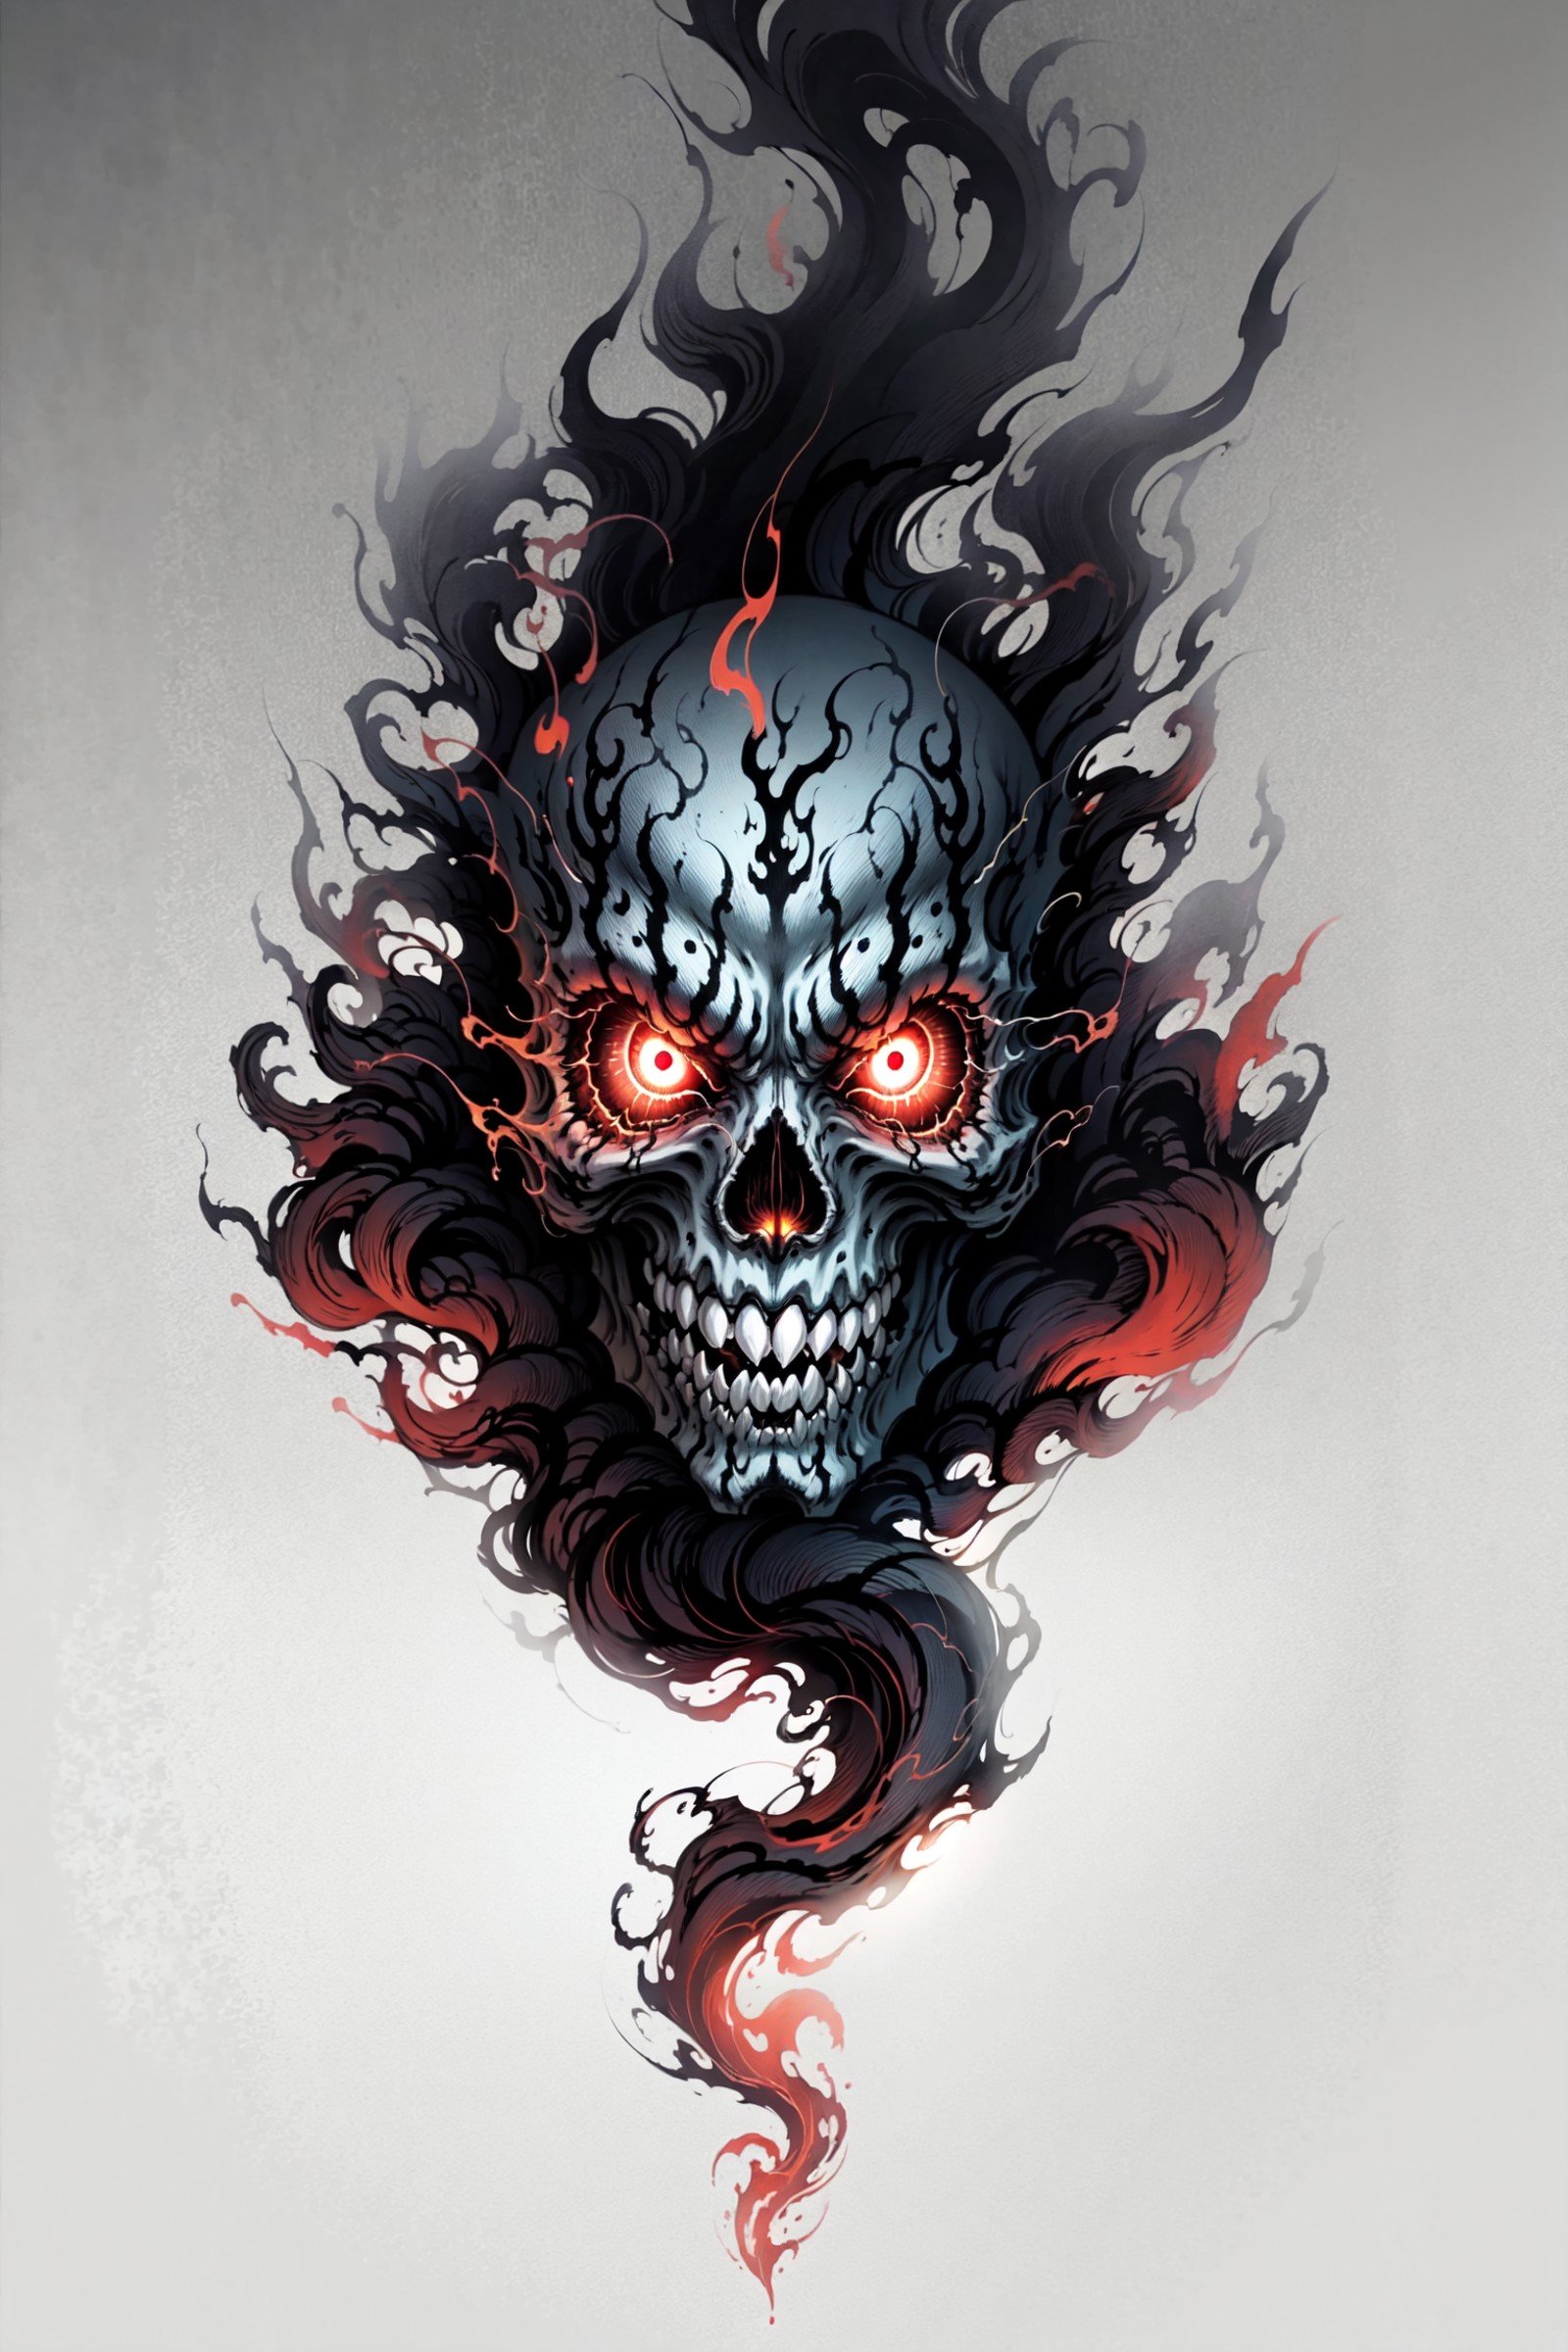 <lyco:BLTA2:0.8> A retro skull, glowing eyes, BLTA, red smoke